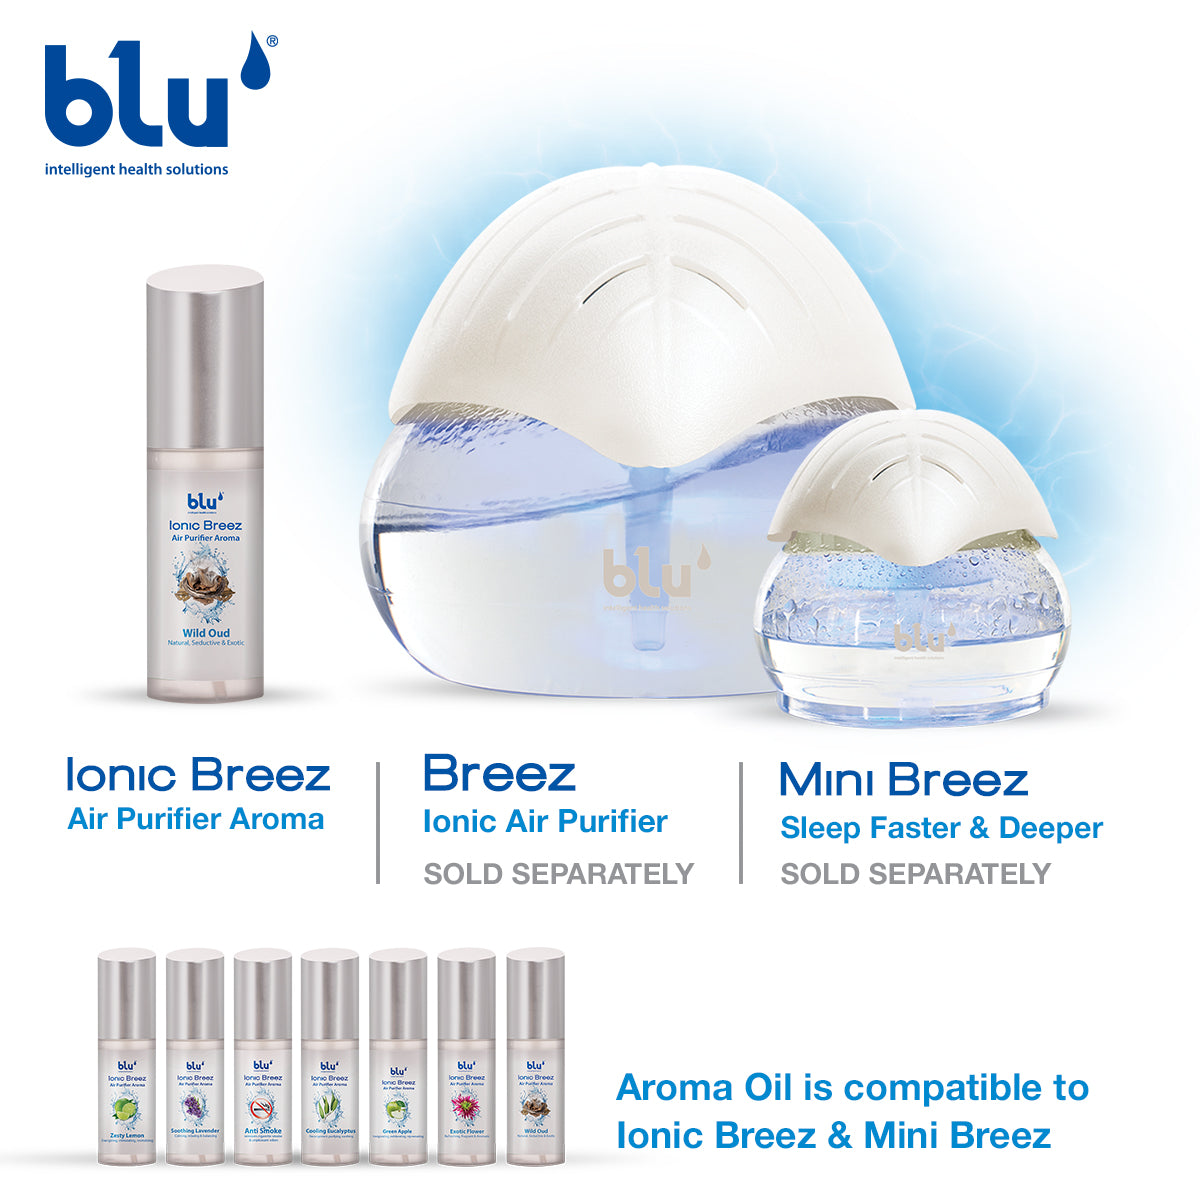 Blu Breez Ionic Breez Air Purifier Aroma Oil - 100ml